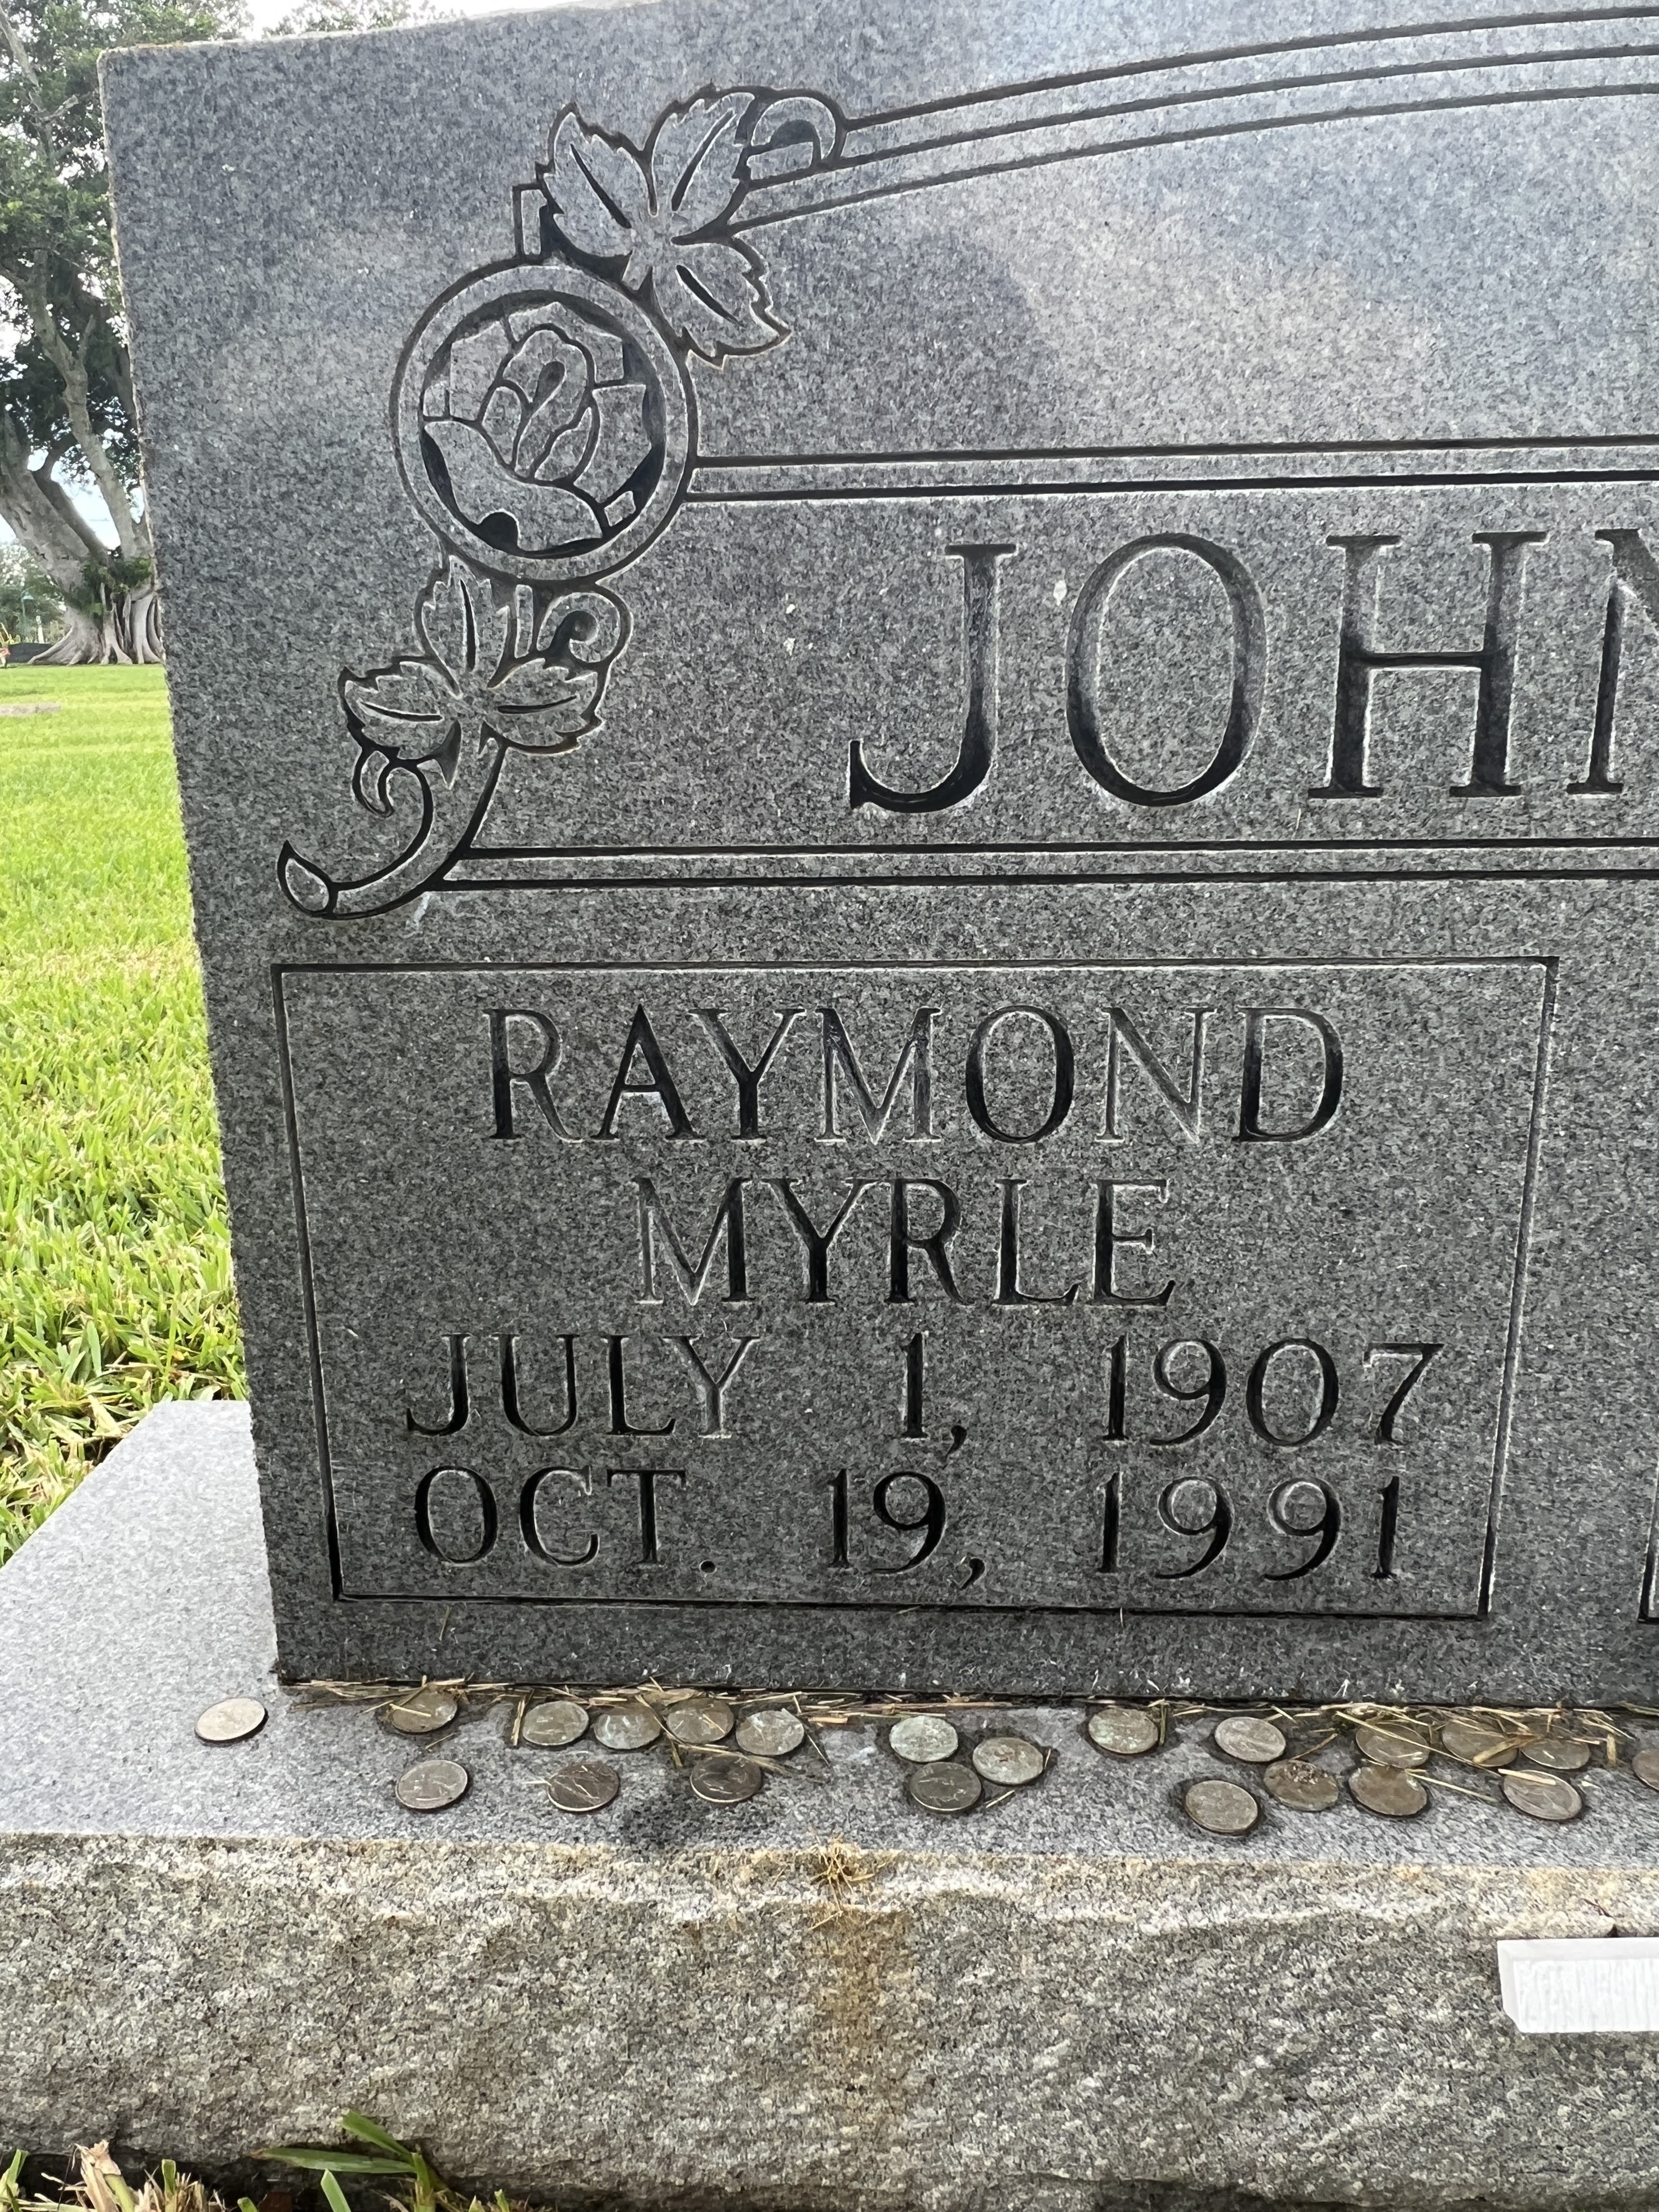 Raymond Myrle Johnson